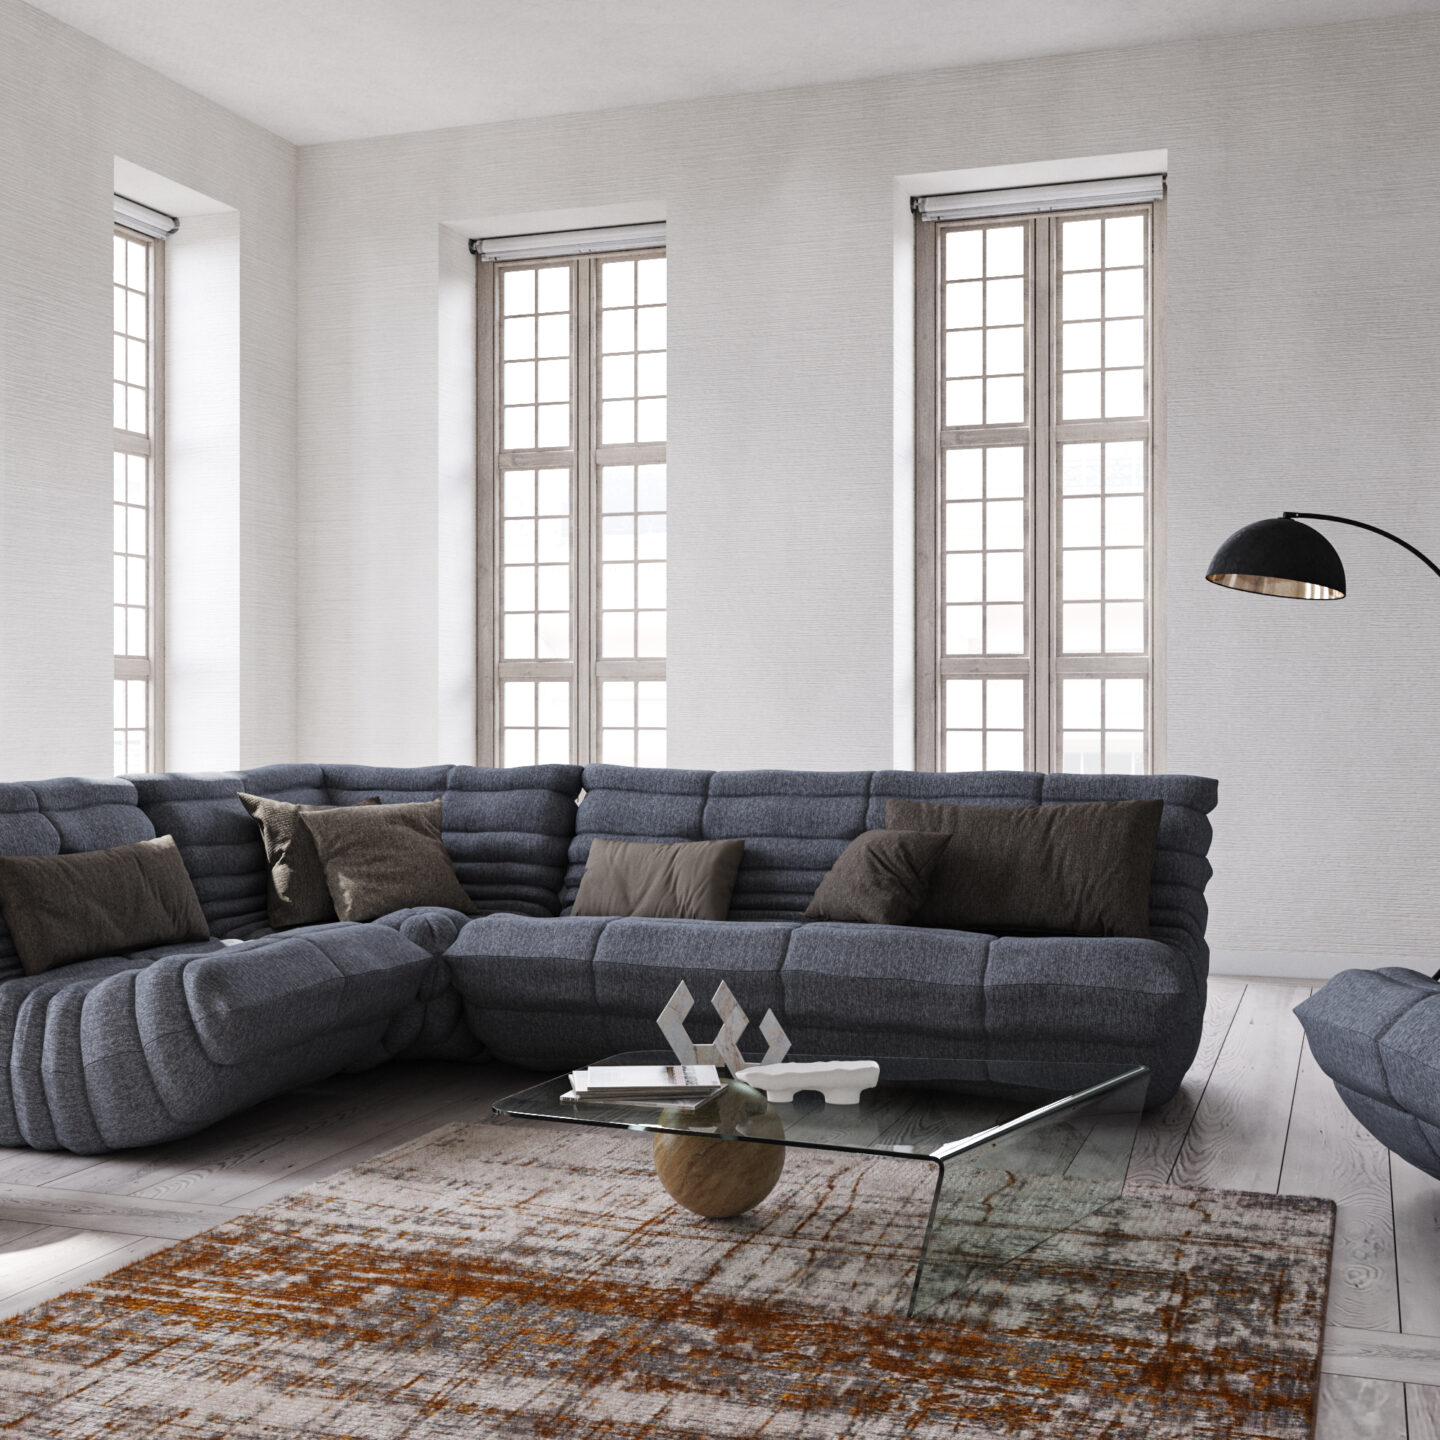 Large luxury lounge with big window and grey sofas using Armourcoat light coloured Stratastone Polished Plaster finish on walls